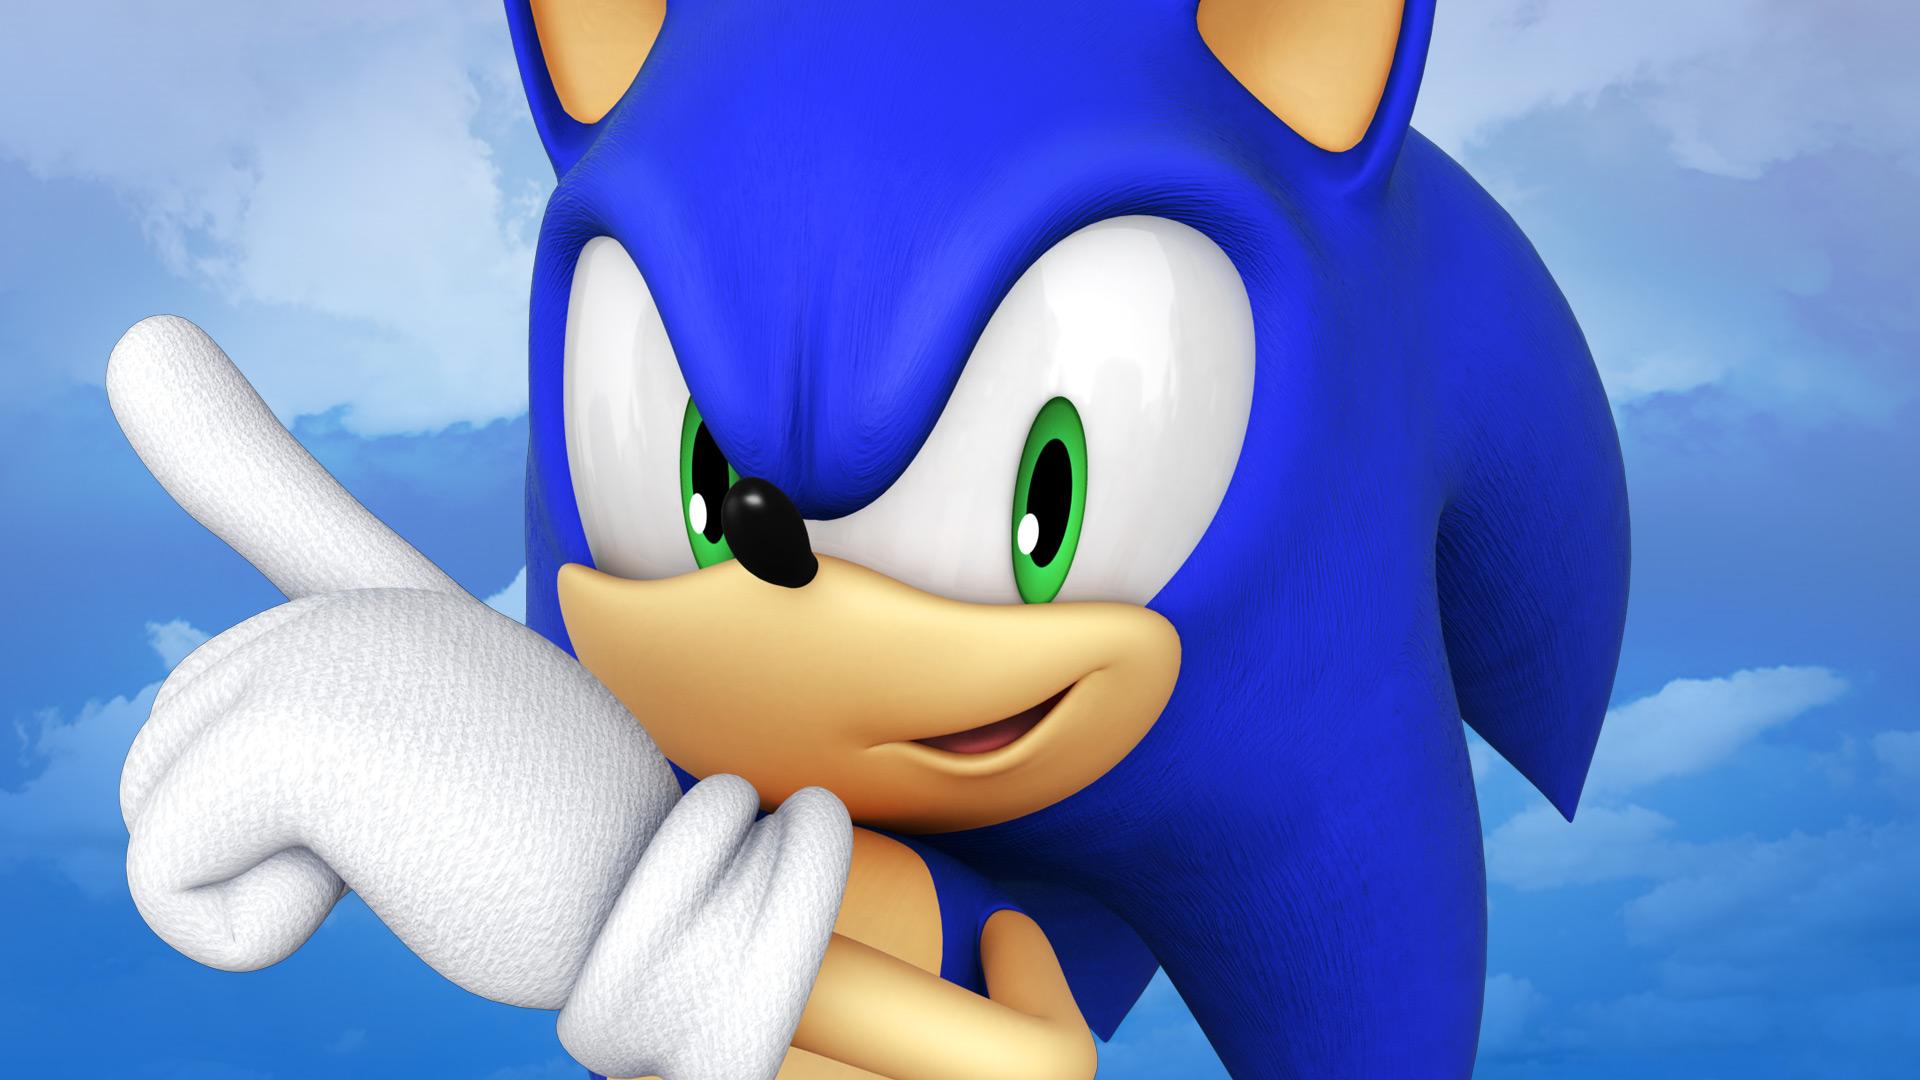 Sonic The Hedgehog movie gets 2019 release date. Den of Geek